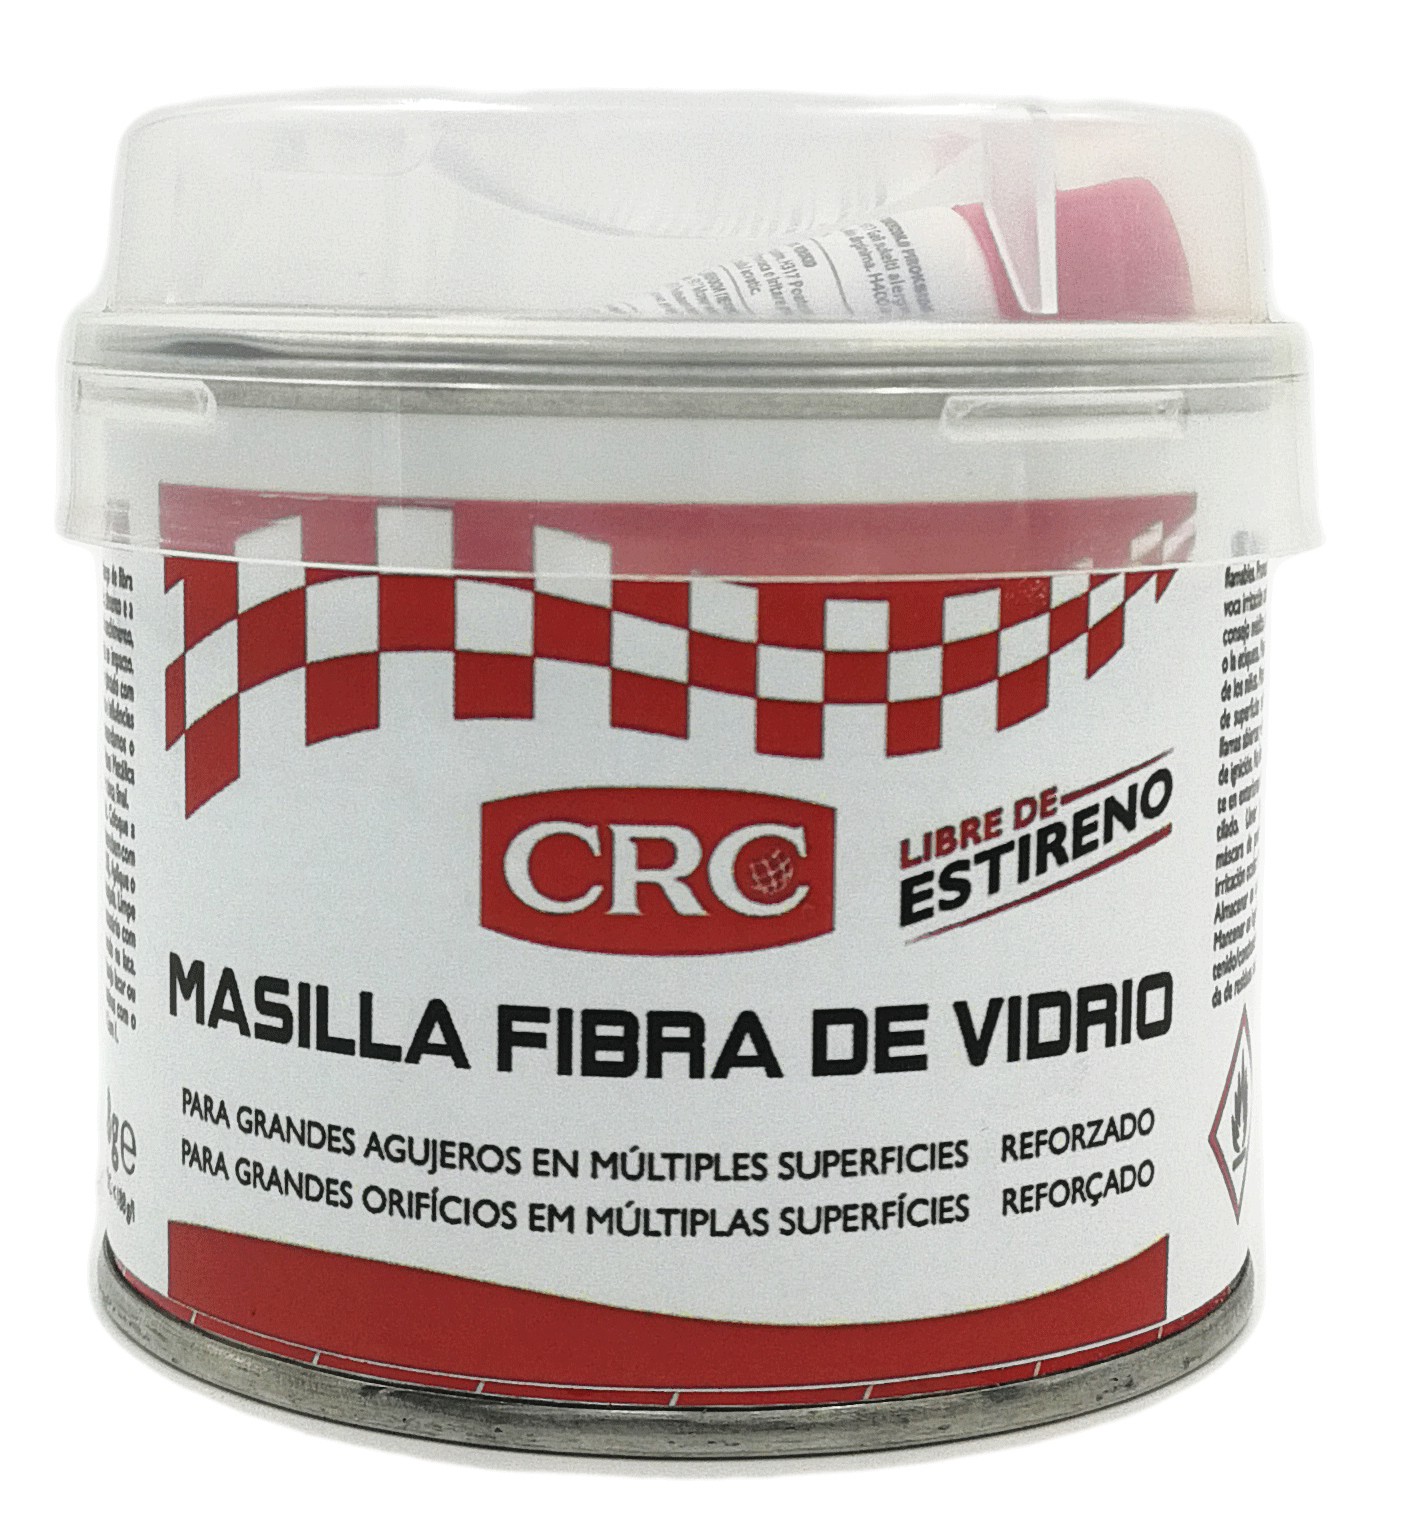 MASILLA FIBRA DE VIDRIO: Masilla reparación fibra de vidrio. SIN ESTIRENO